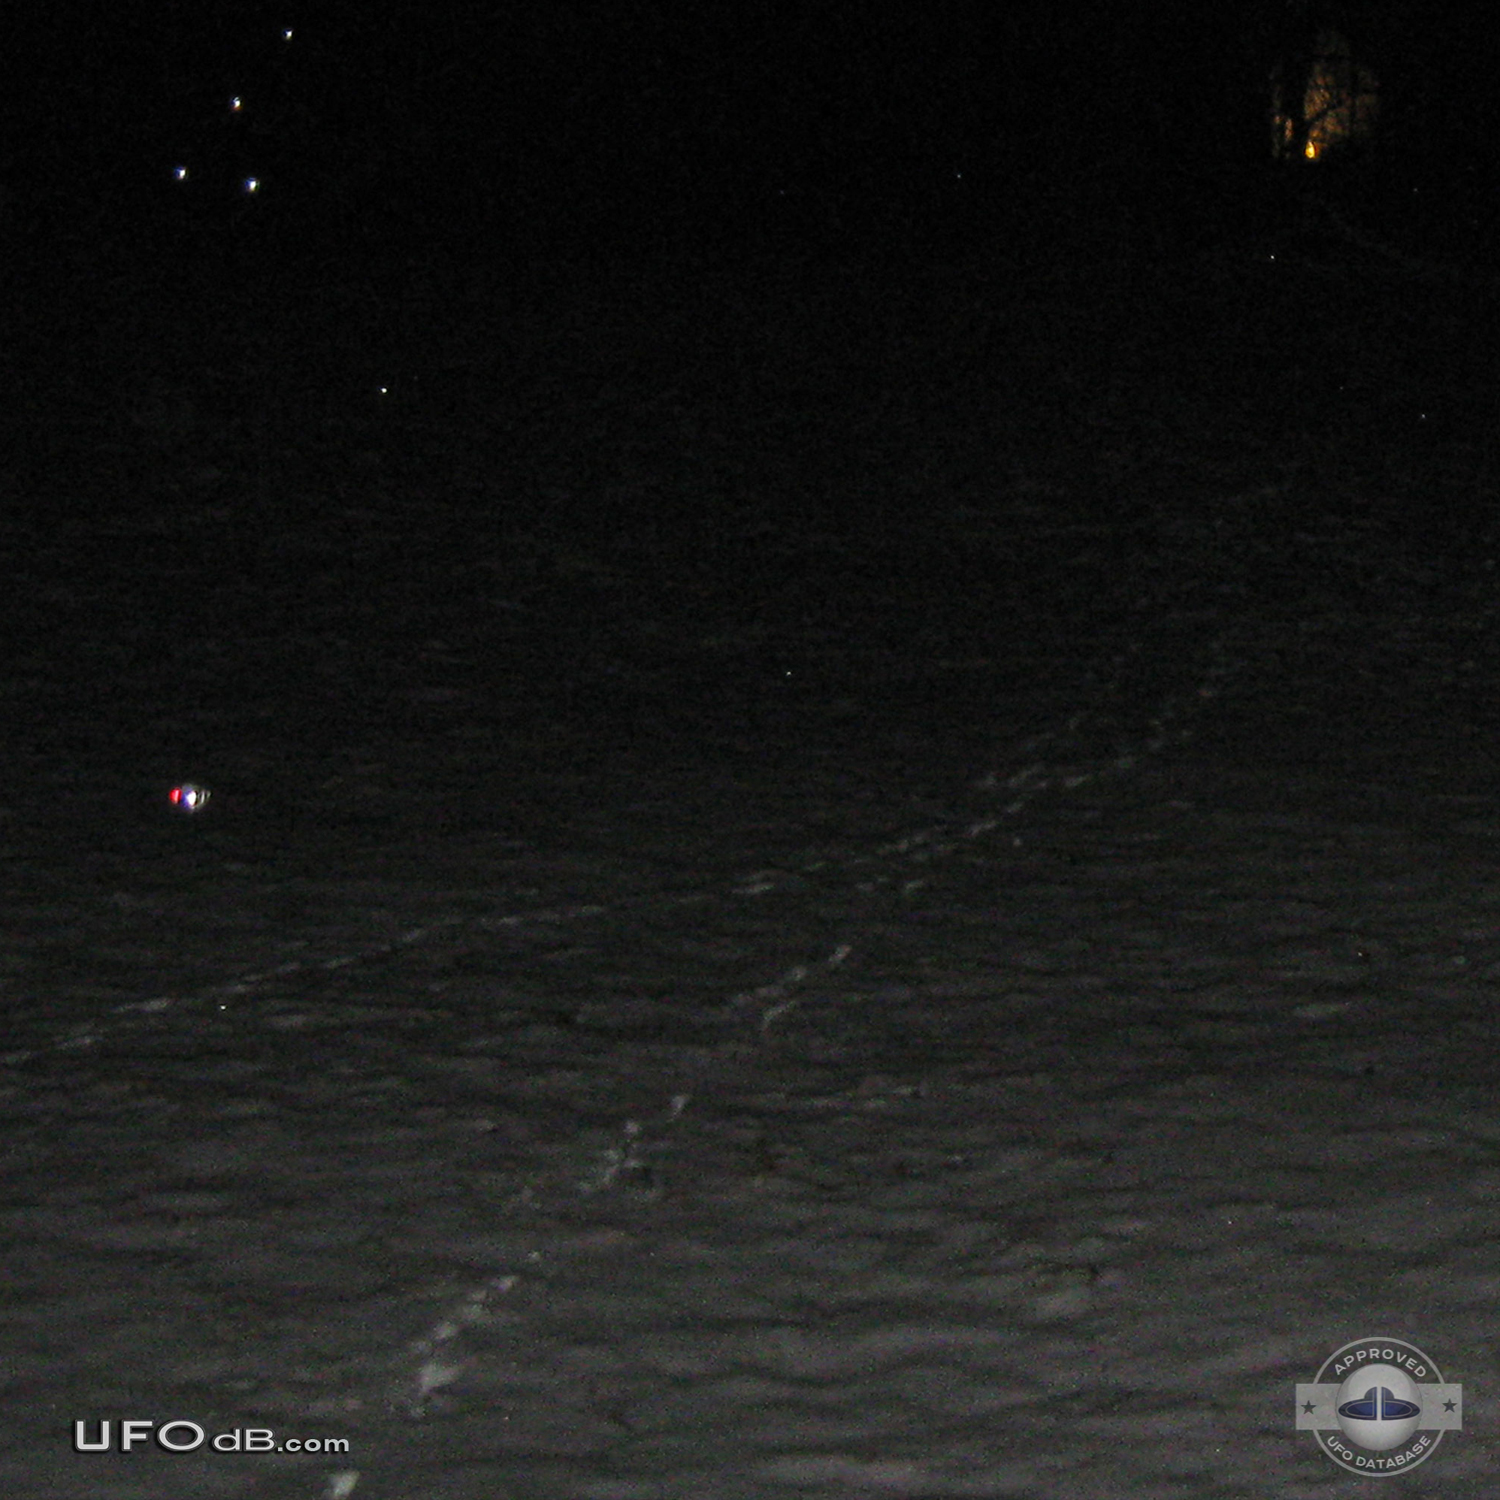 Probe UFO near the snow touching it - Kansas City, Missouri - 2012 UFO Picture #415-1